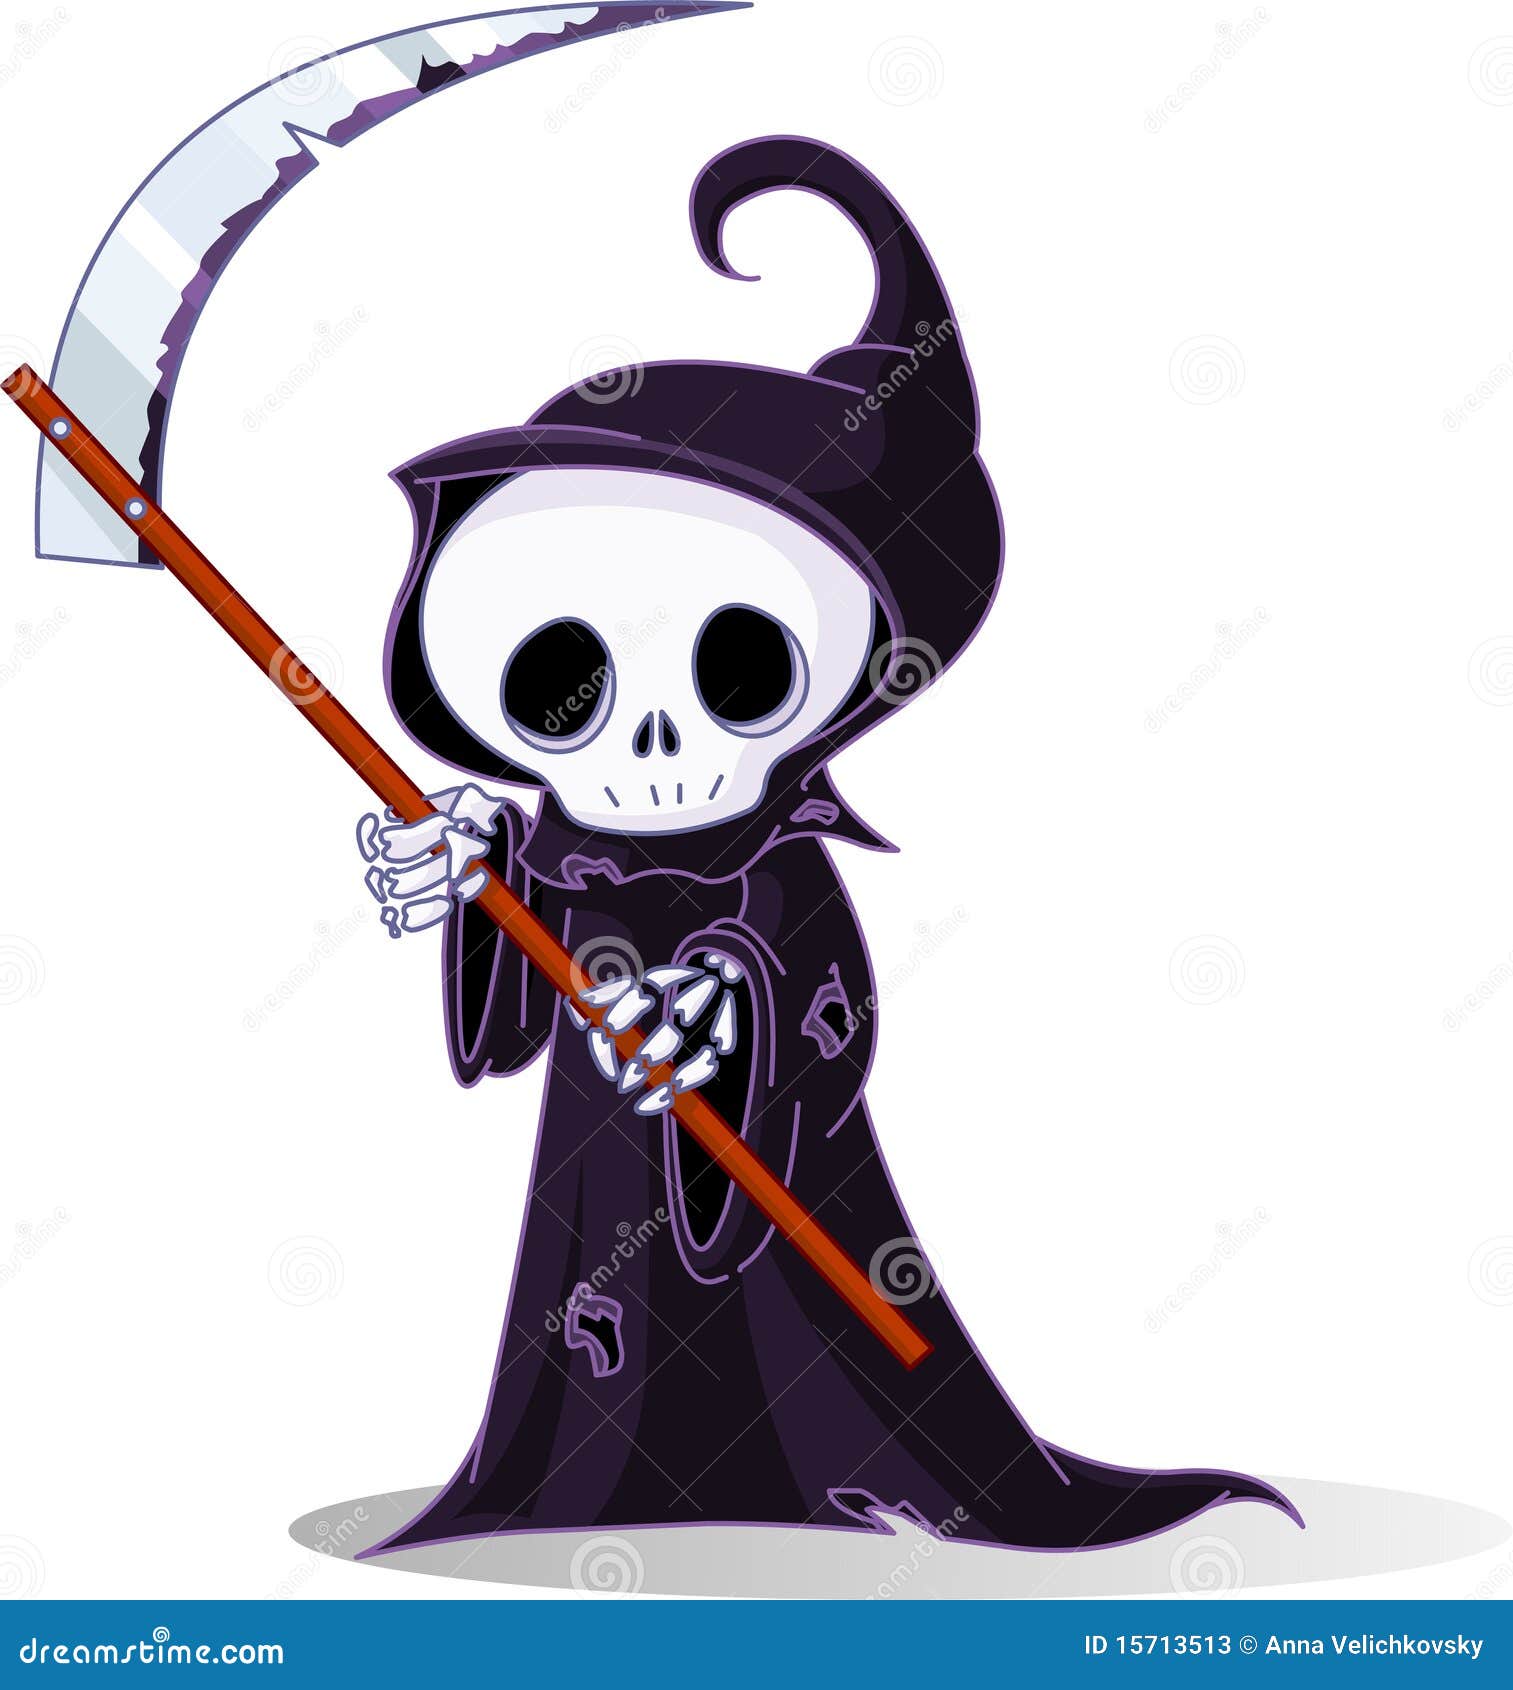 cartoon grim reaper